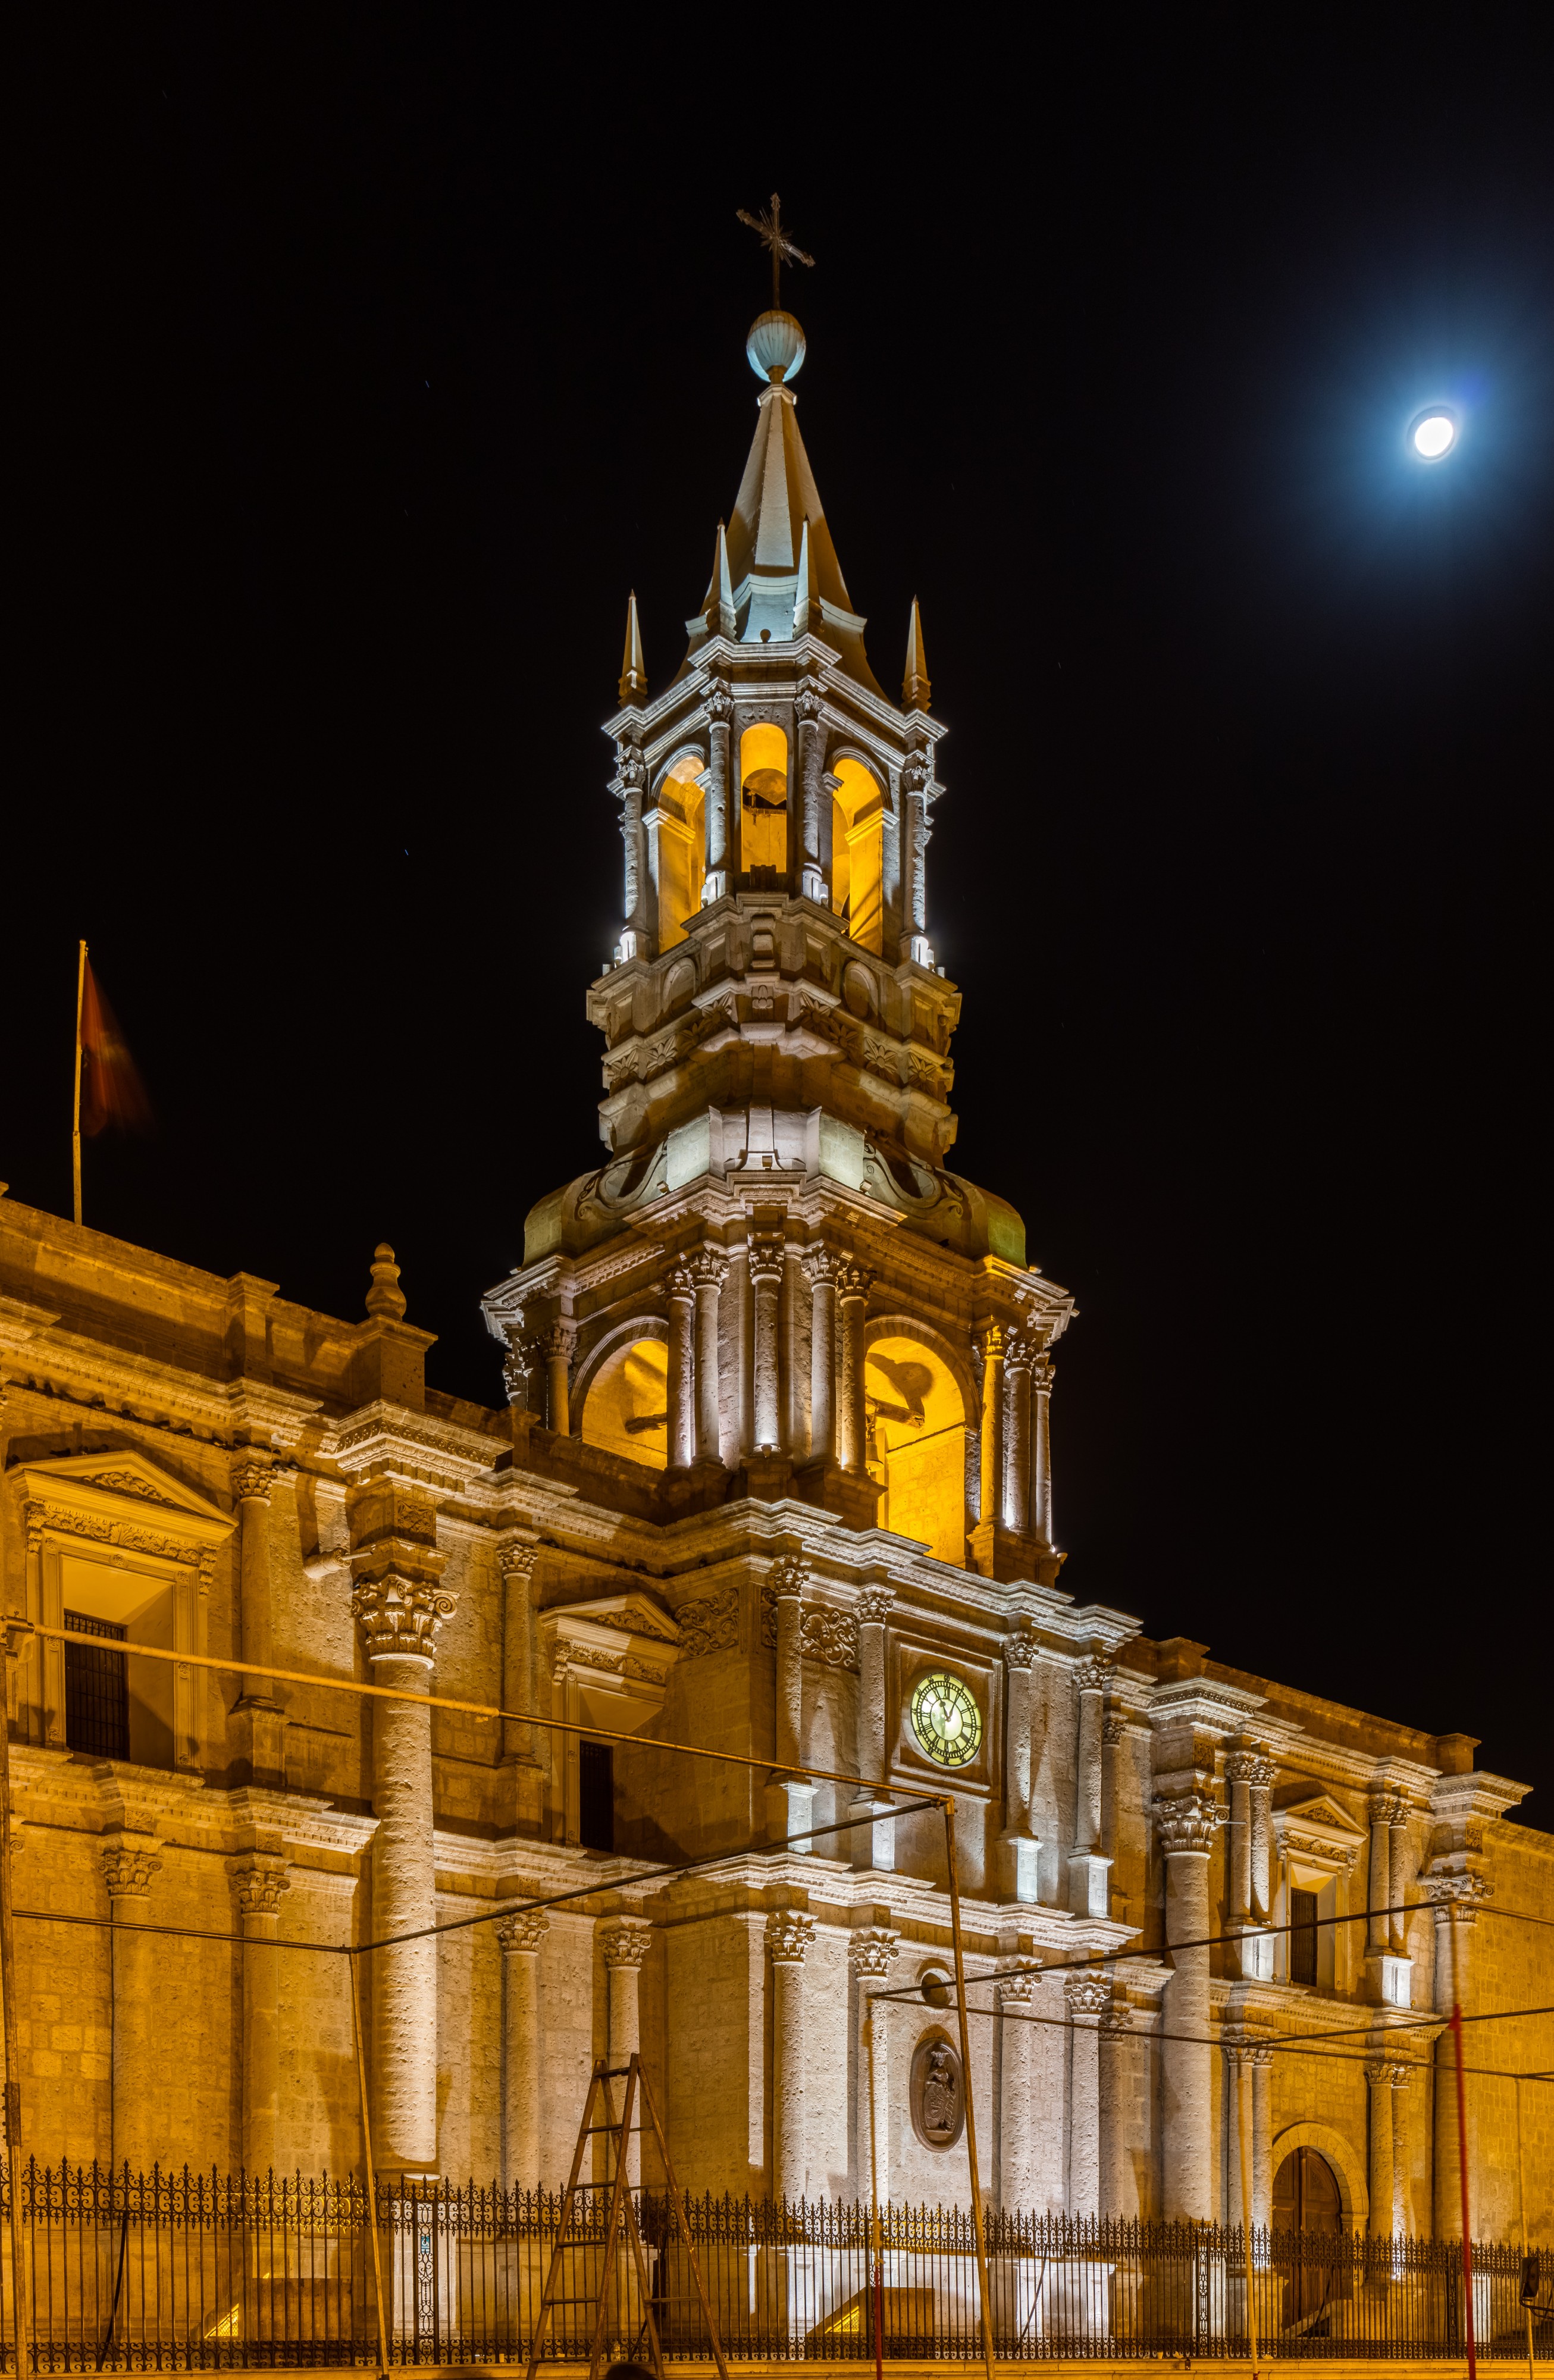 Basílica catedral, Arequipa, Perú, 2015-08-02, DD 73-75 HDR